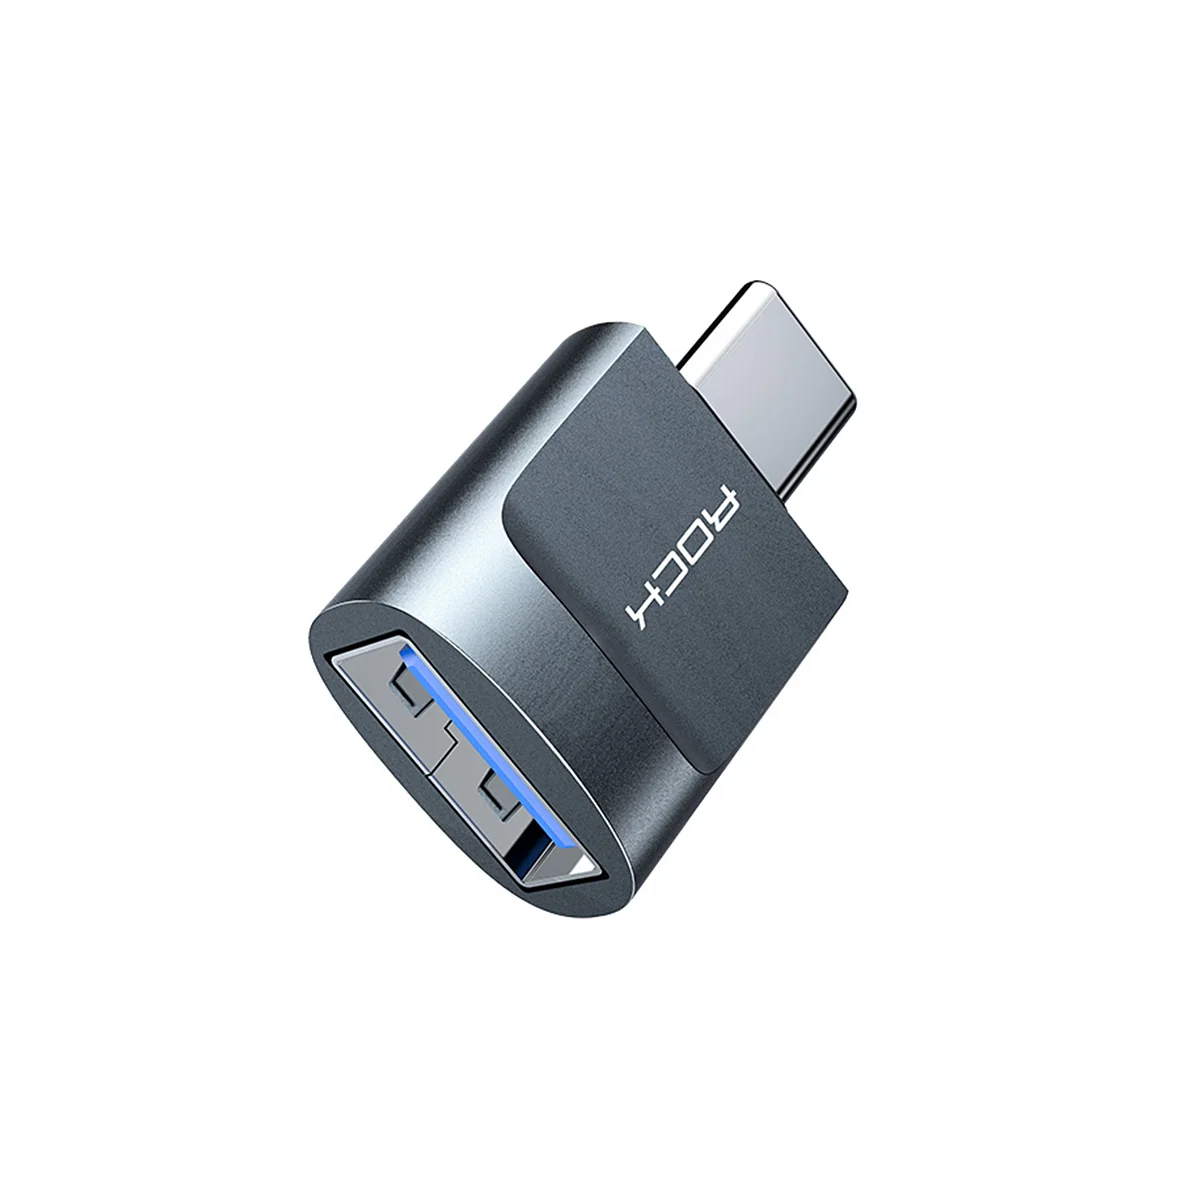 ROCK usb type C OTG адаптер Micro USB AF to type-c 3,0 адаптер зарядное устройство кабель для передачи данных конвертер для Macbook samsung S10 huawei - Цвет: Tarnish